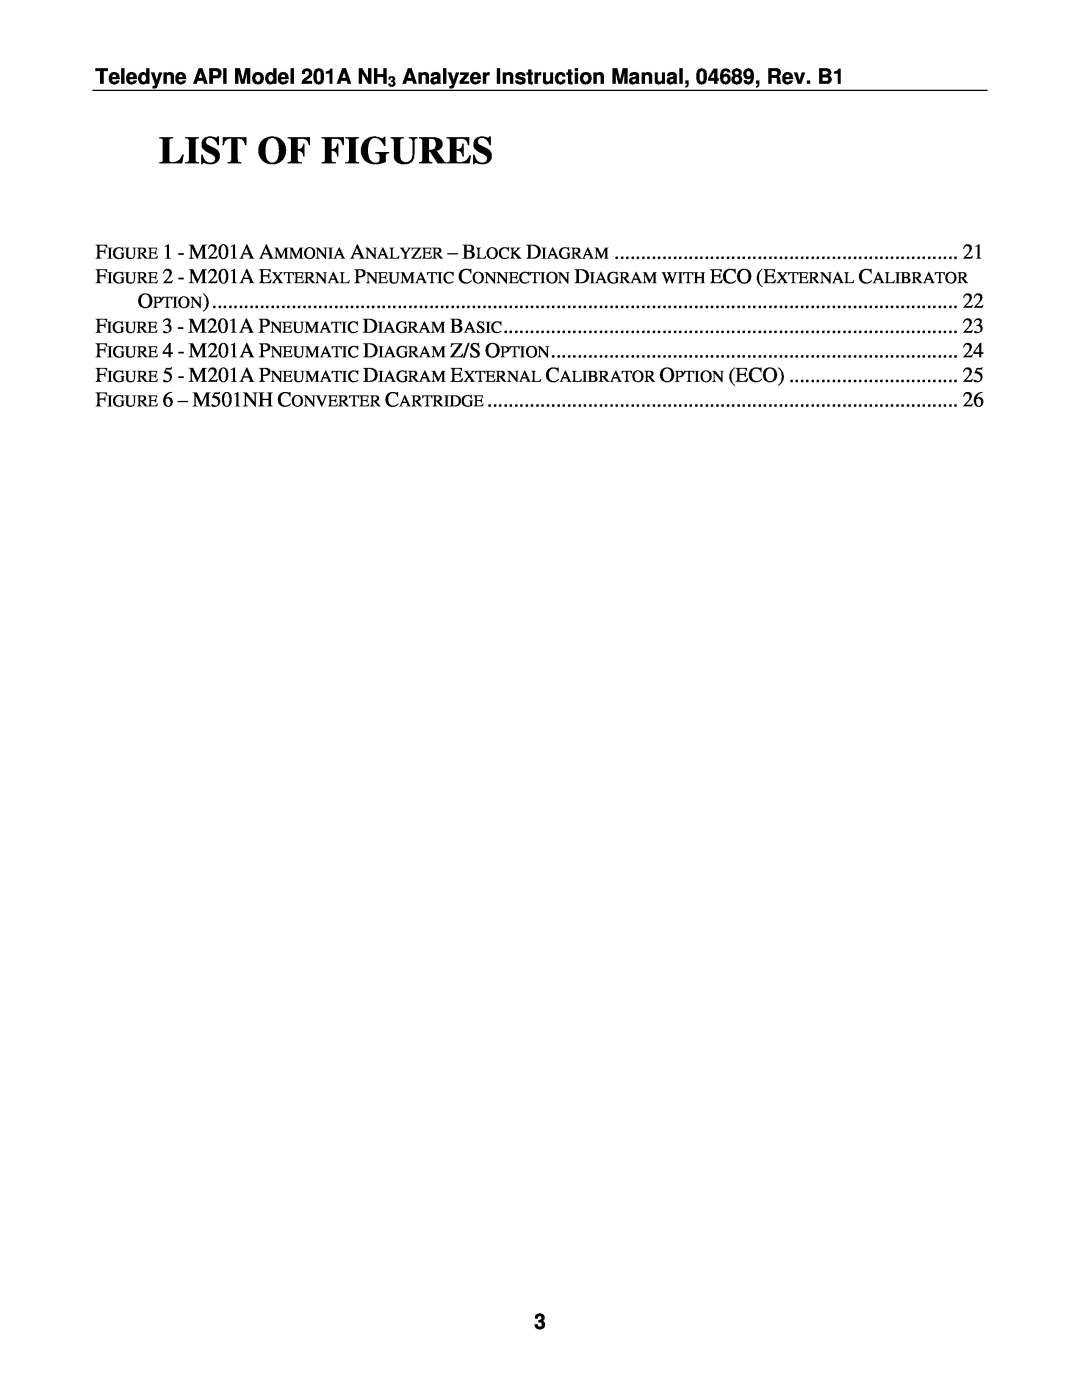 Teledyne 201A manual List Of Figures 